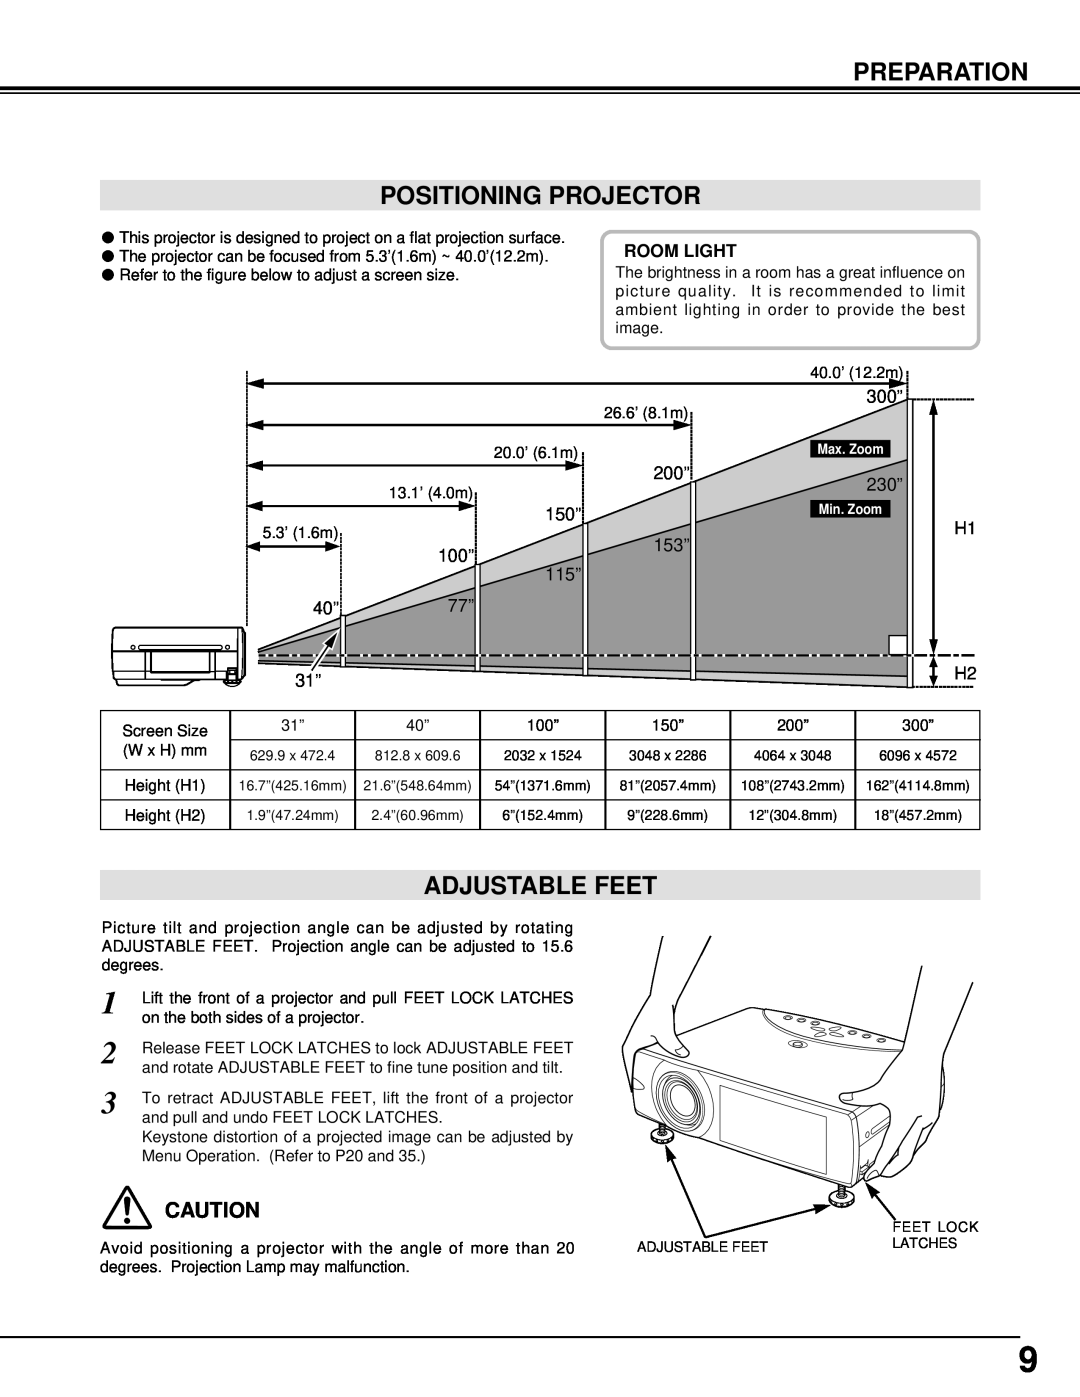 BOXLIGHT cp-12t manual Preparation Positioning Projector, Adjustable Feet, 200”, 150”, 153” 100” 115” 40”77”, 300”, 230” 